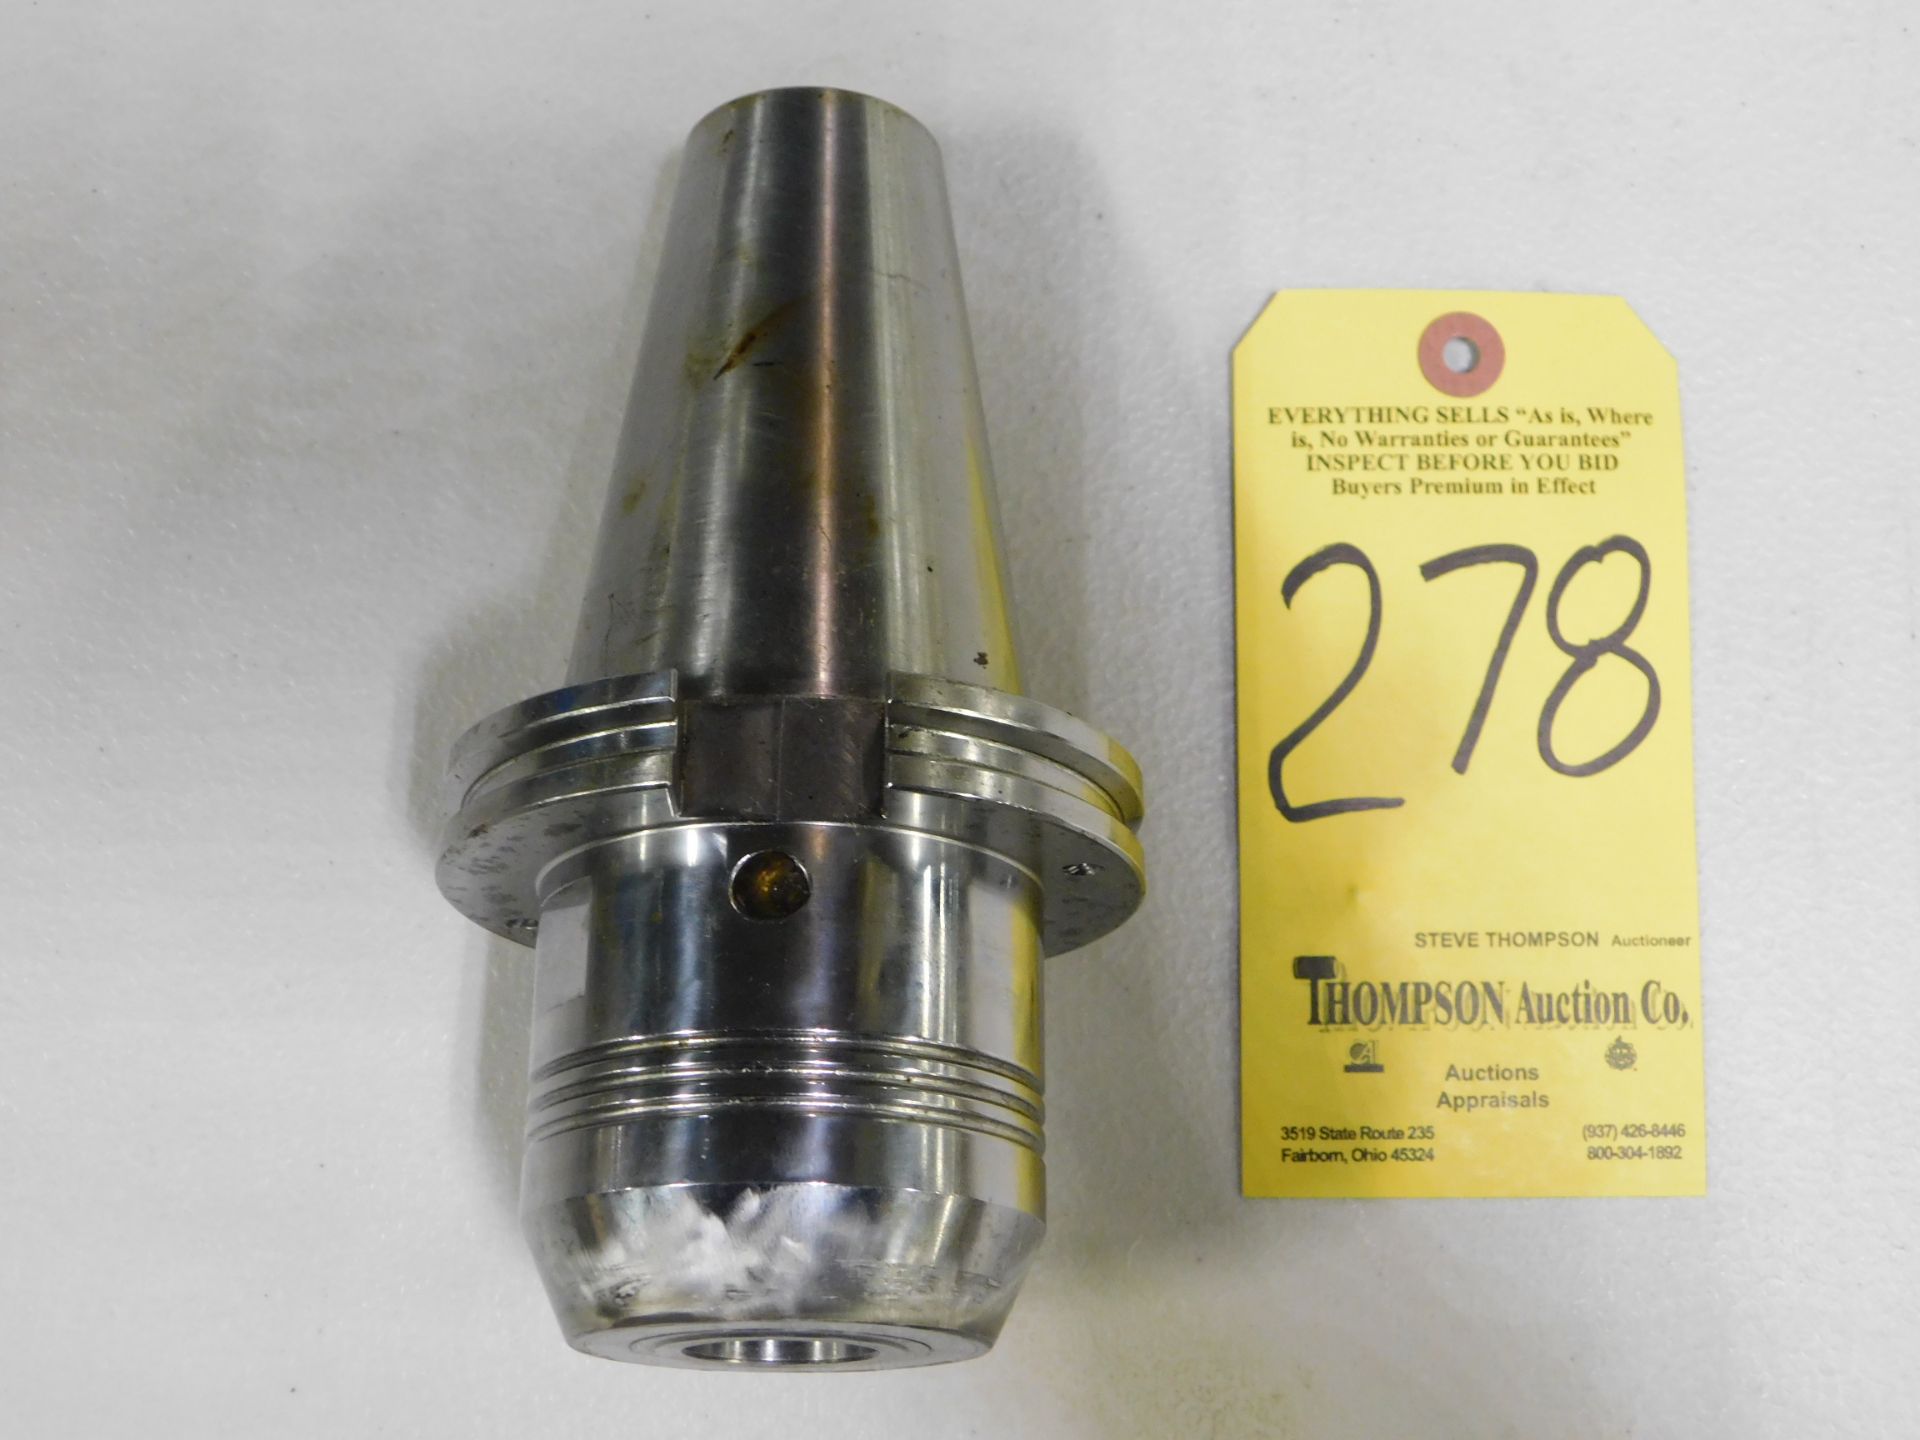 Schunk 203949 Cat 50, 1" Hydraulic Shrink Fit Tool Holder